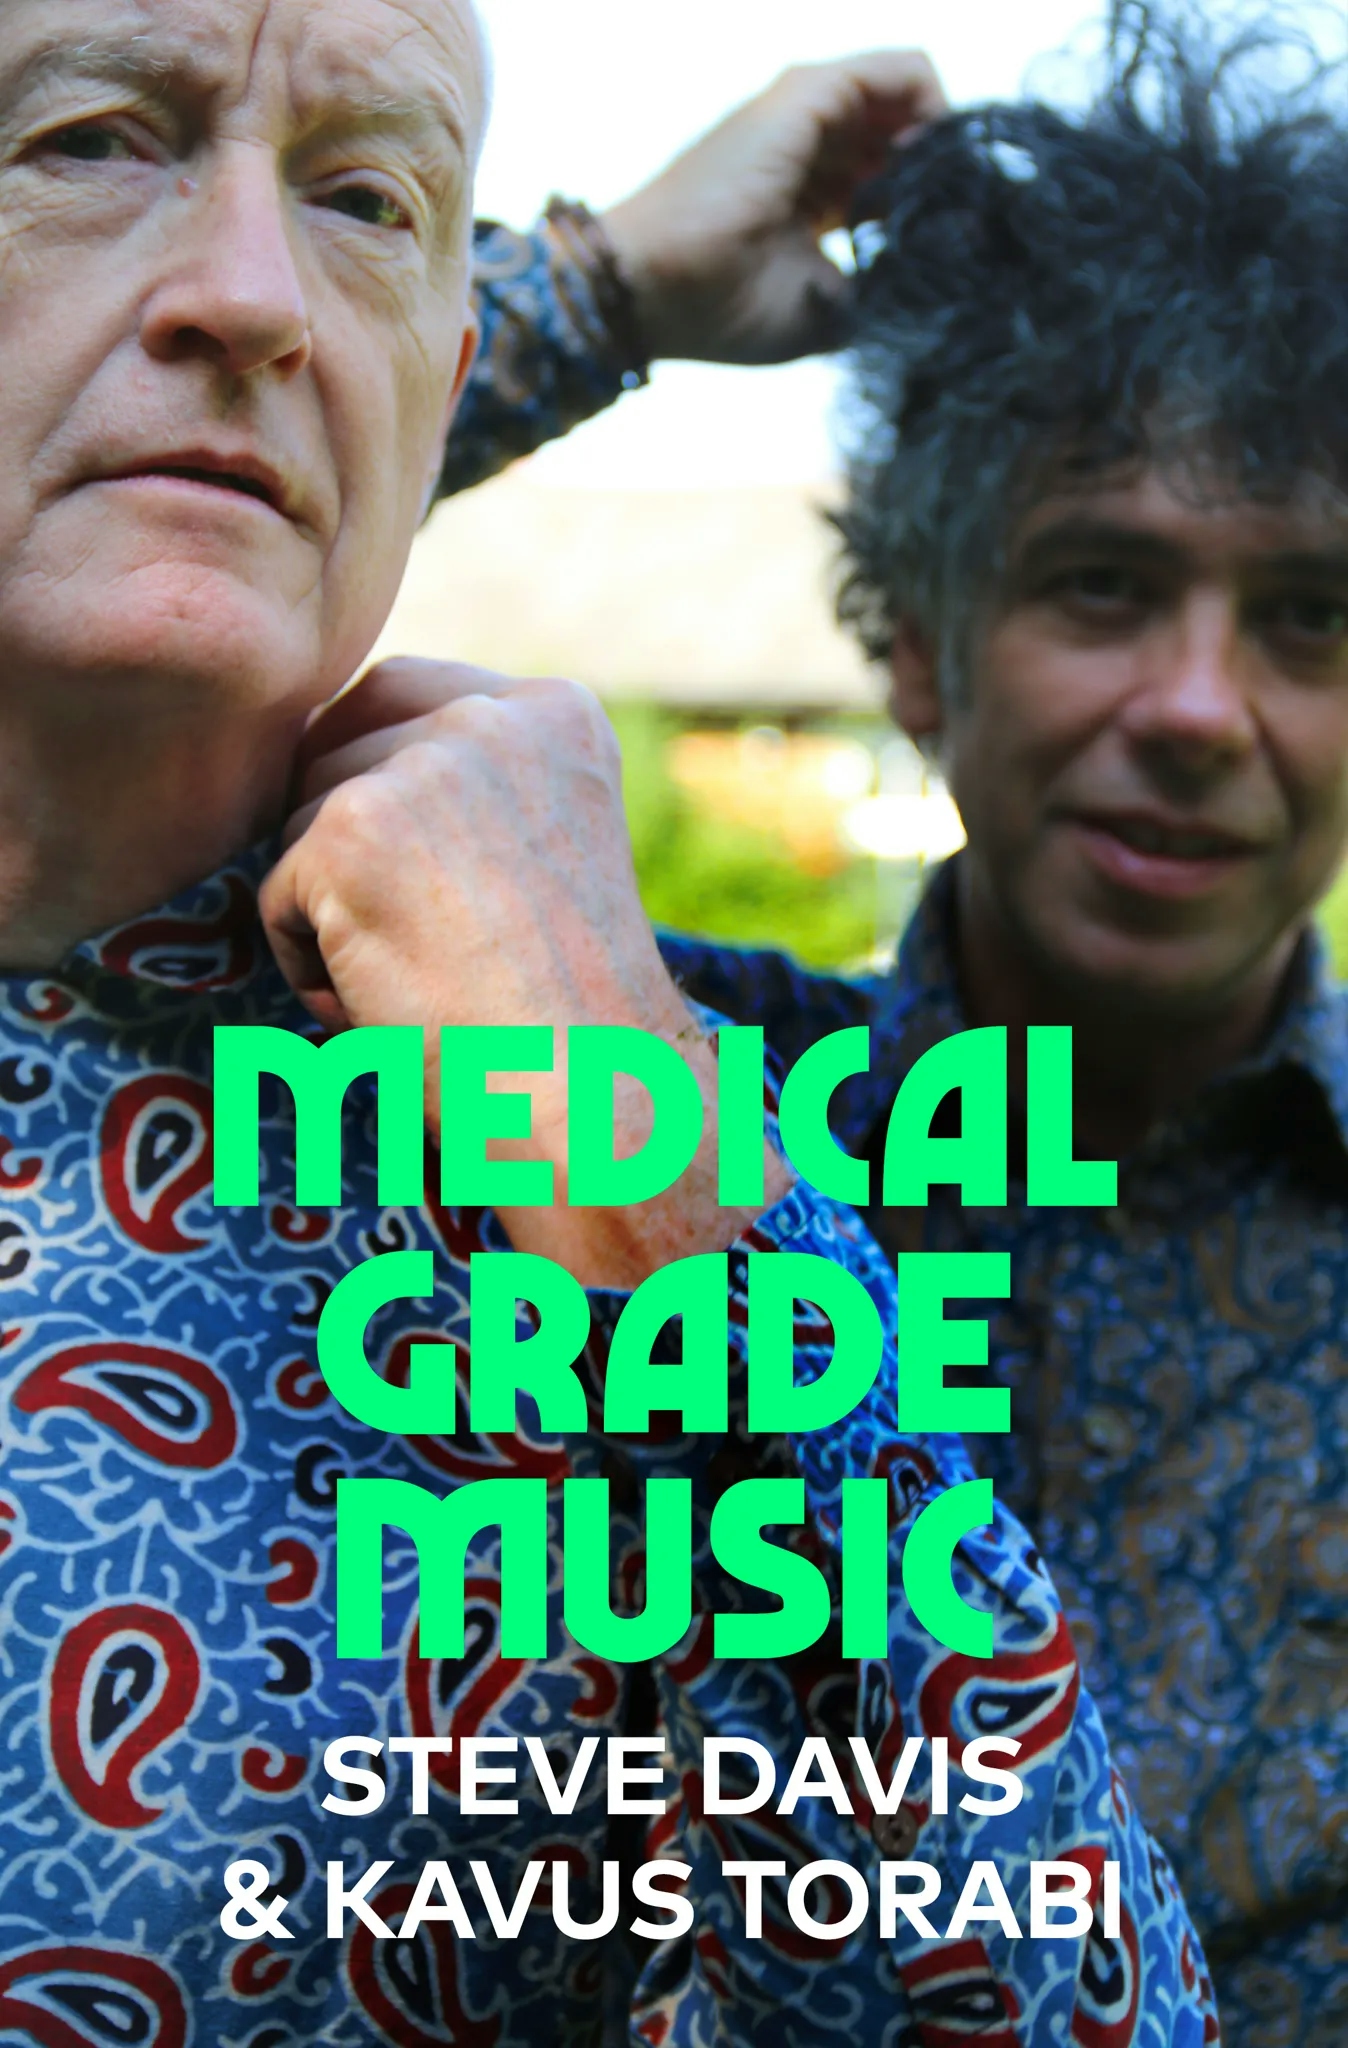 Album artwork for Medical Grade Music by Steve Davis and Kavus Torabi